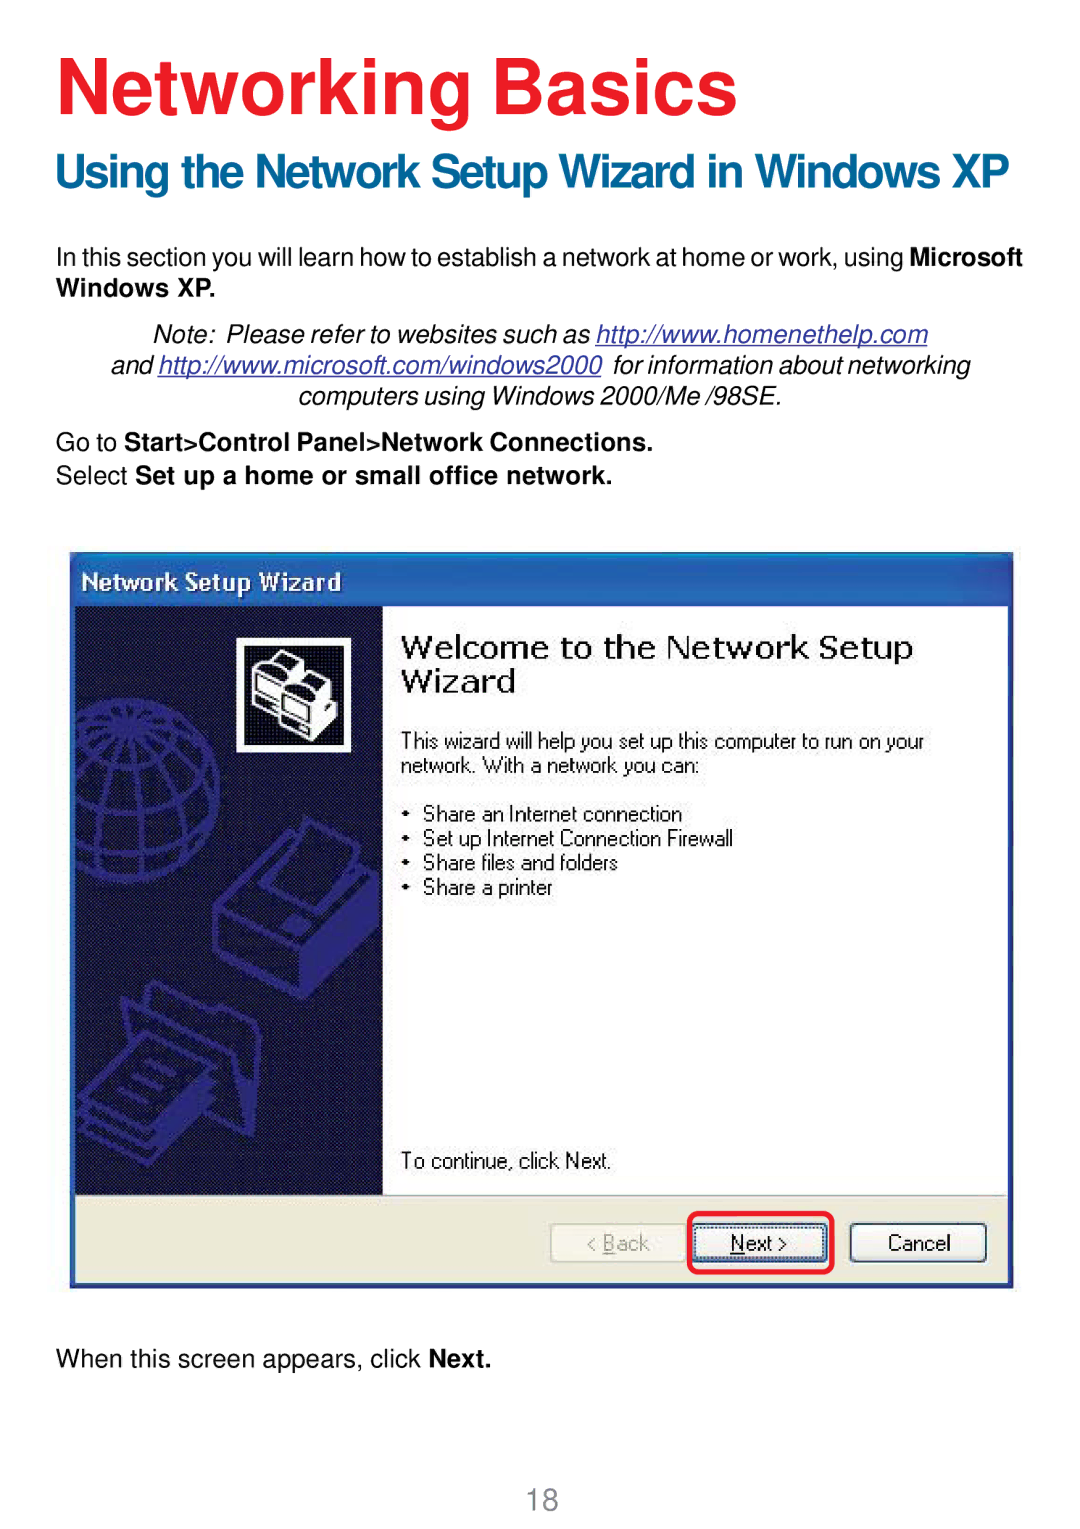 D-Link DWL-G510 manual Networking Basics, Windows XP 